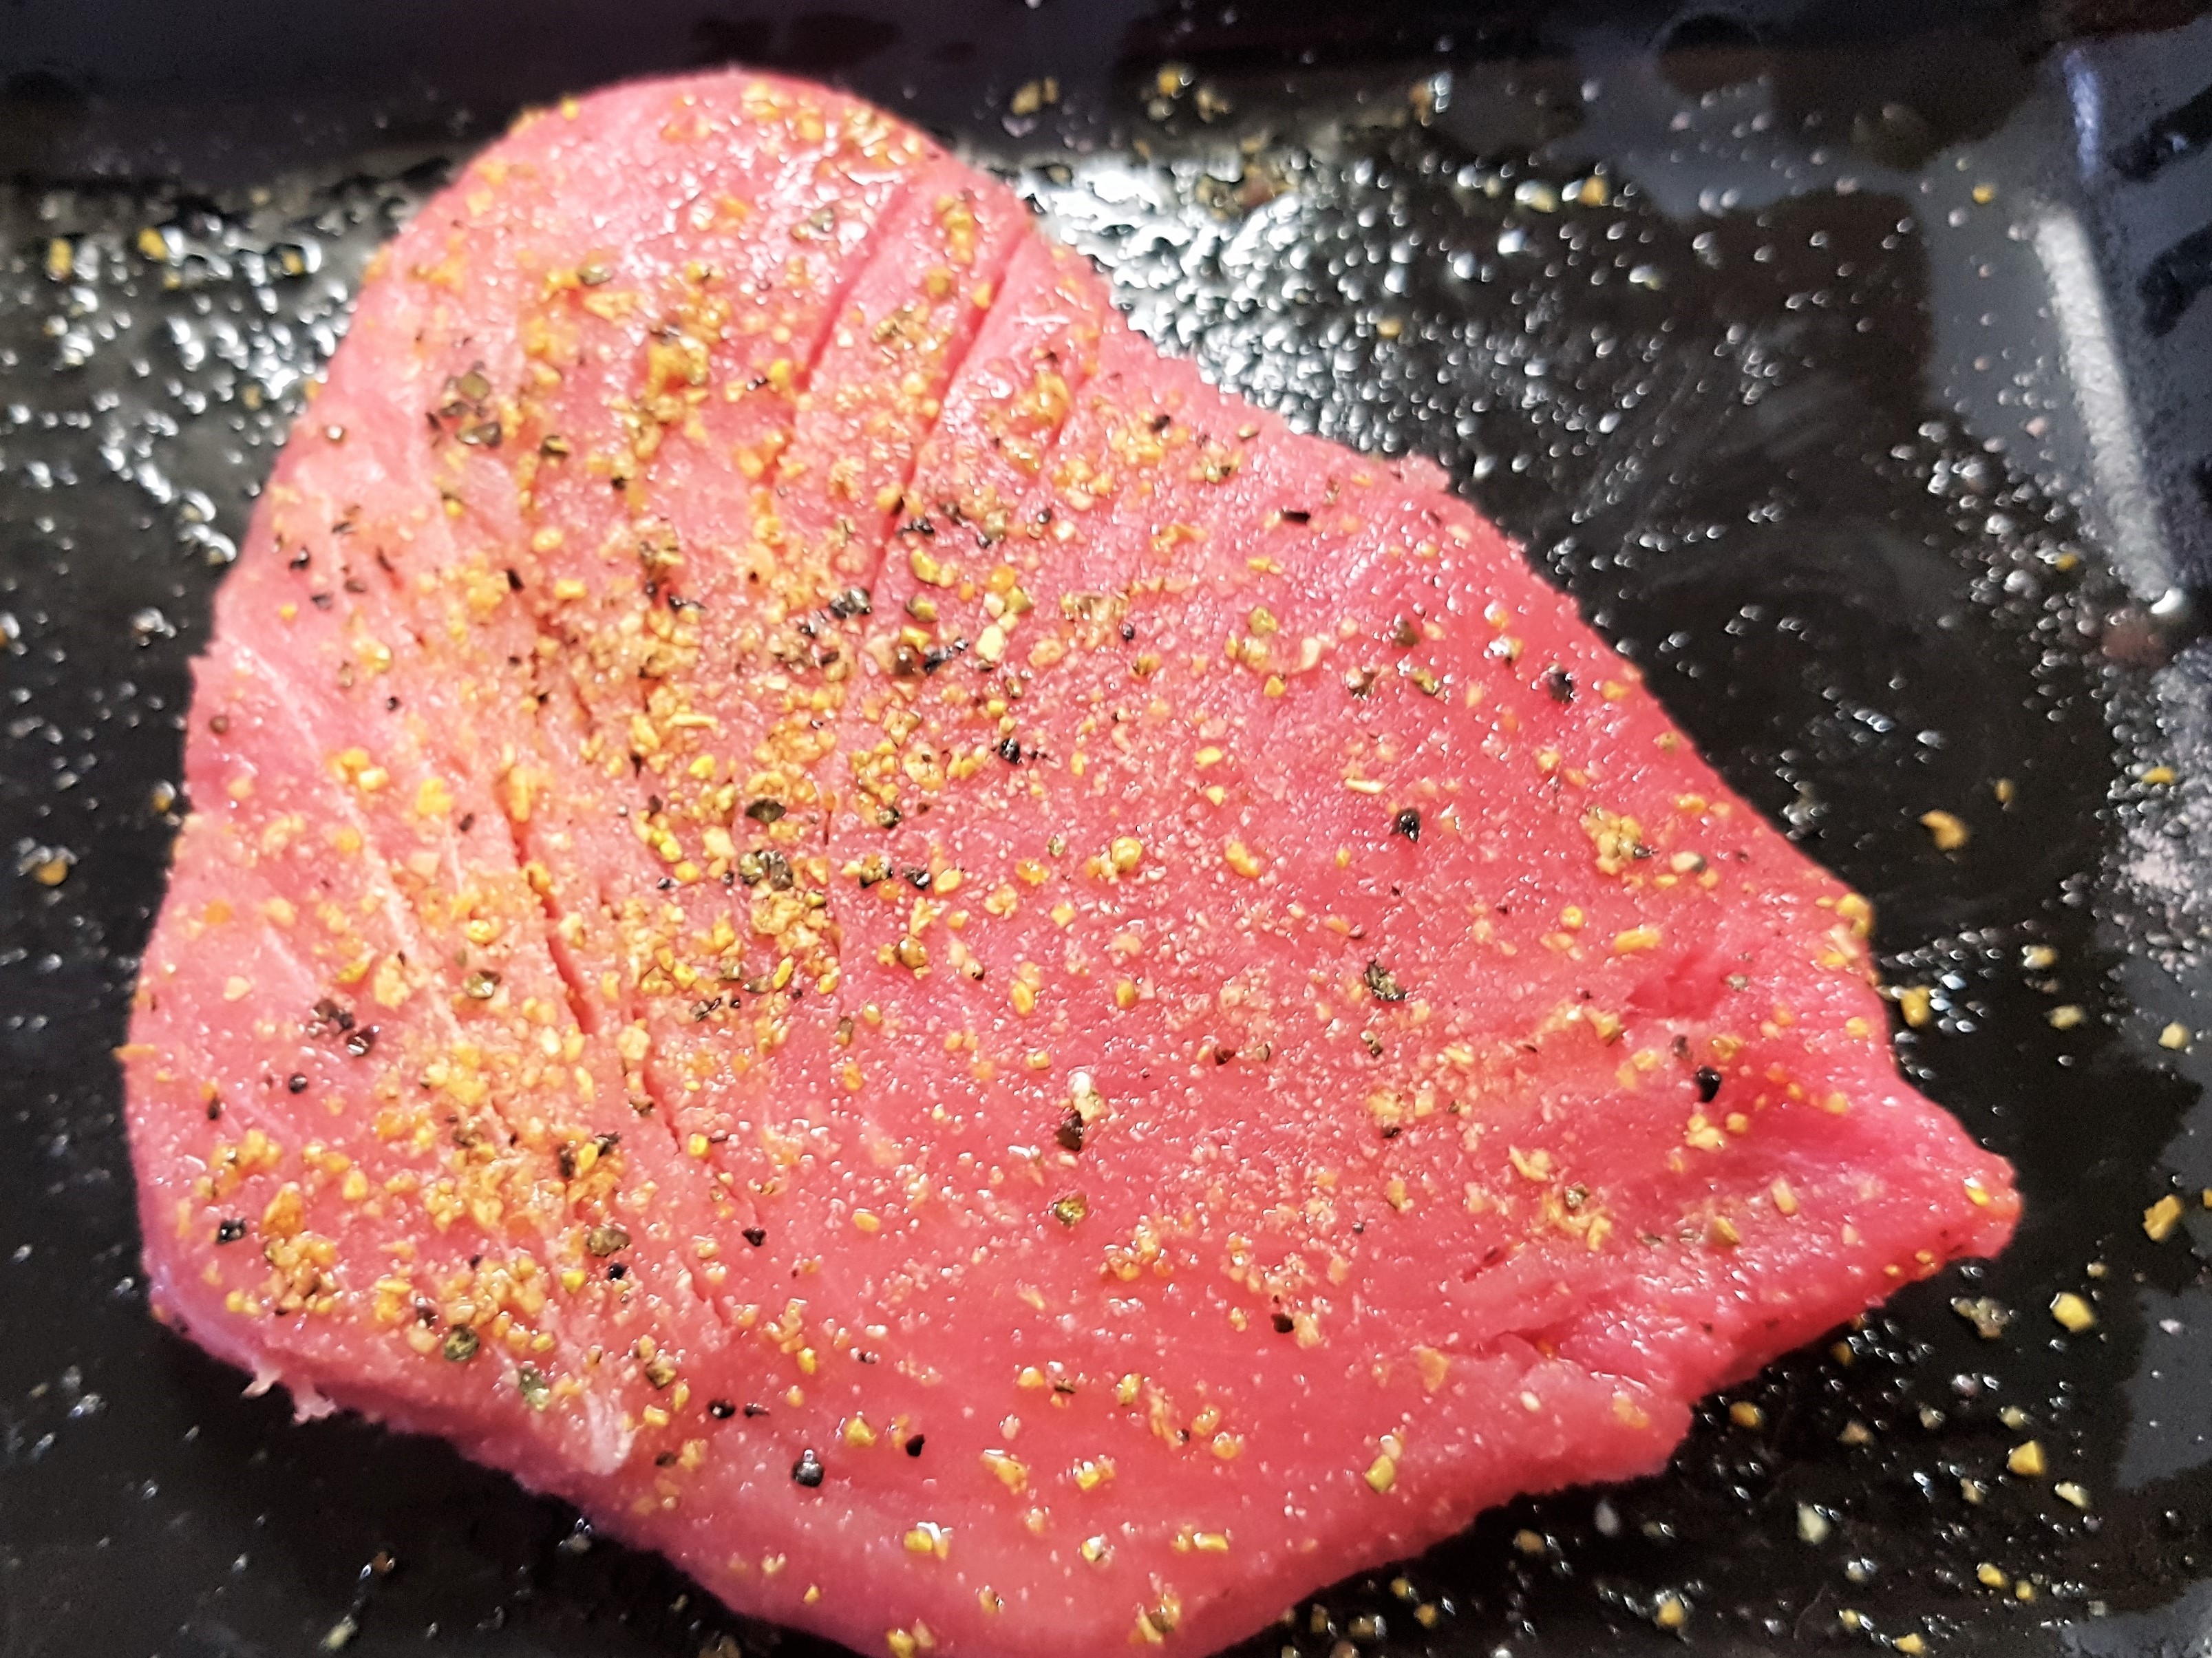 Steak de ton proaspat cu legume reteta pentru o masa delicioasa